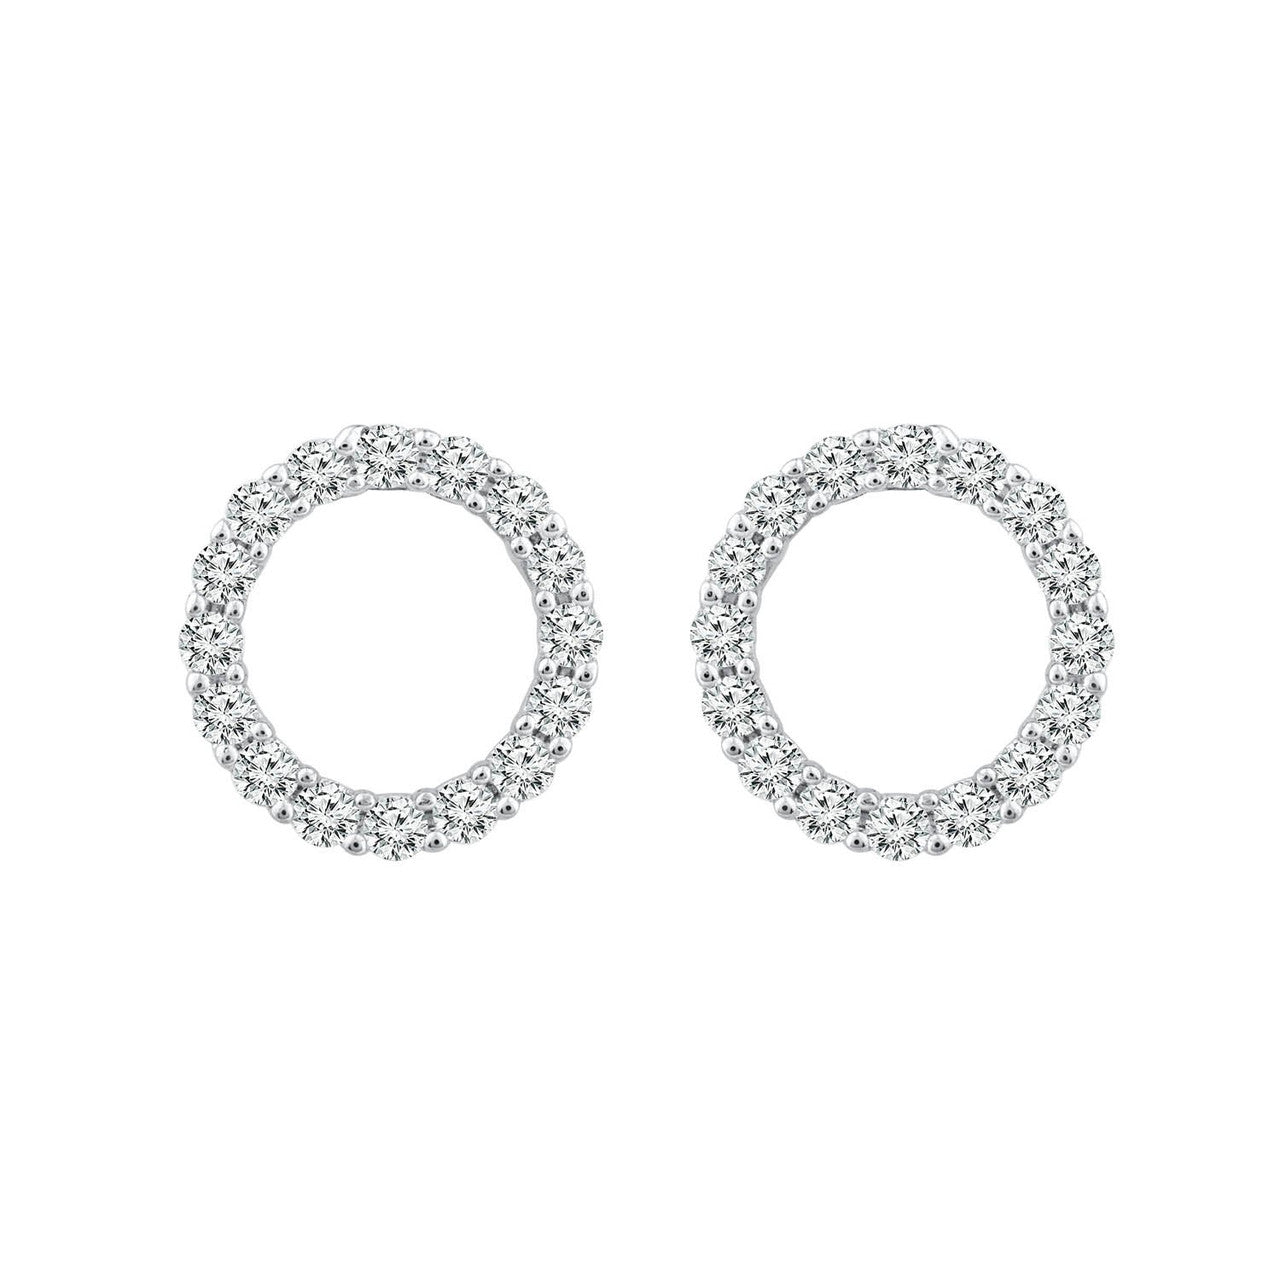 Ice Jewellery Diamond Fashion Earrings with 0.20ct Diamonds in 9K White Gold - EF-5954-W | Ice Jewellery Australia